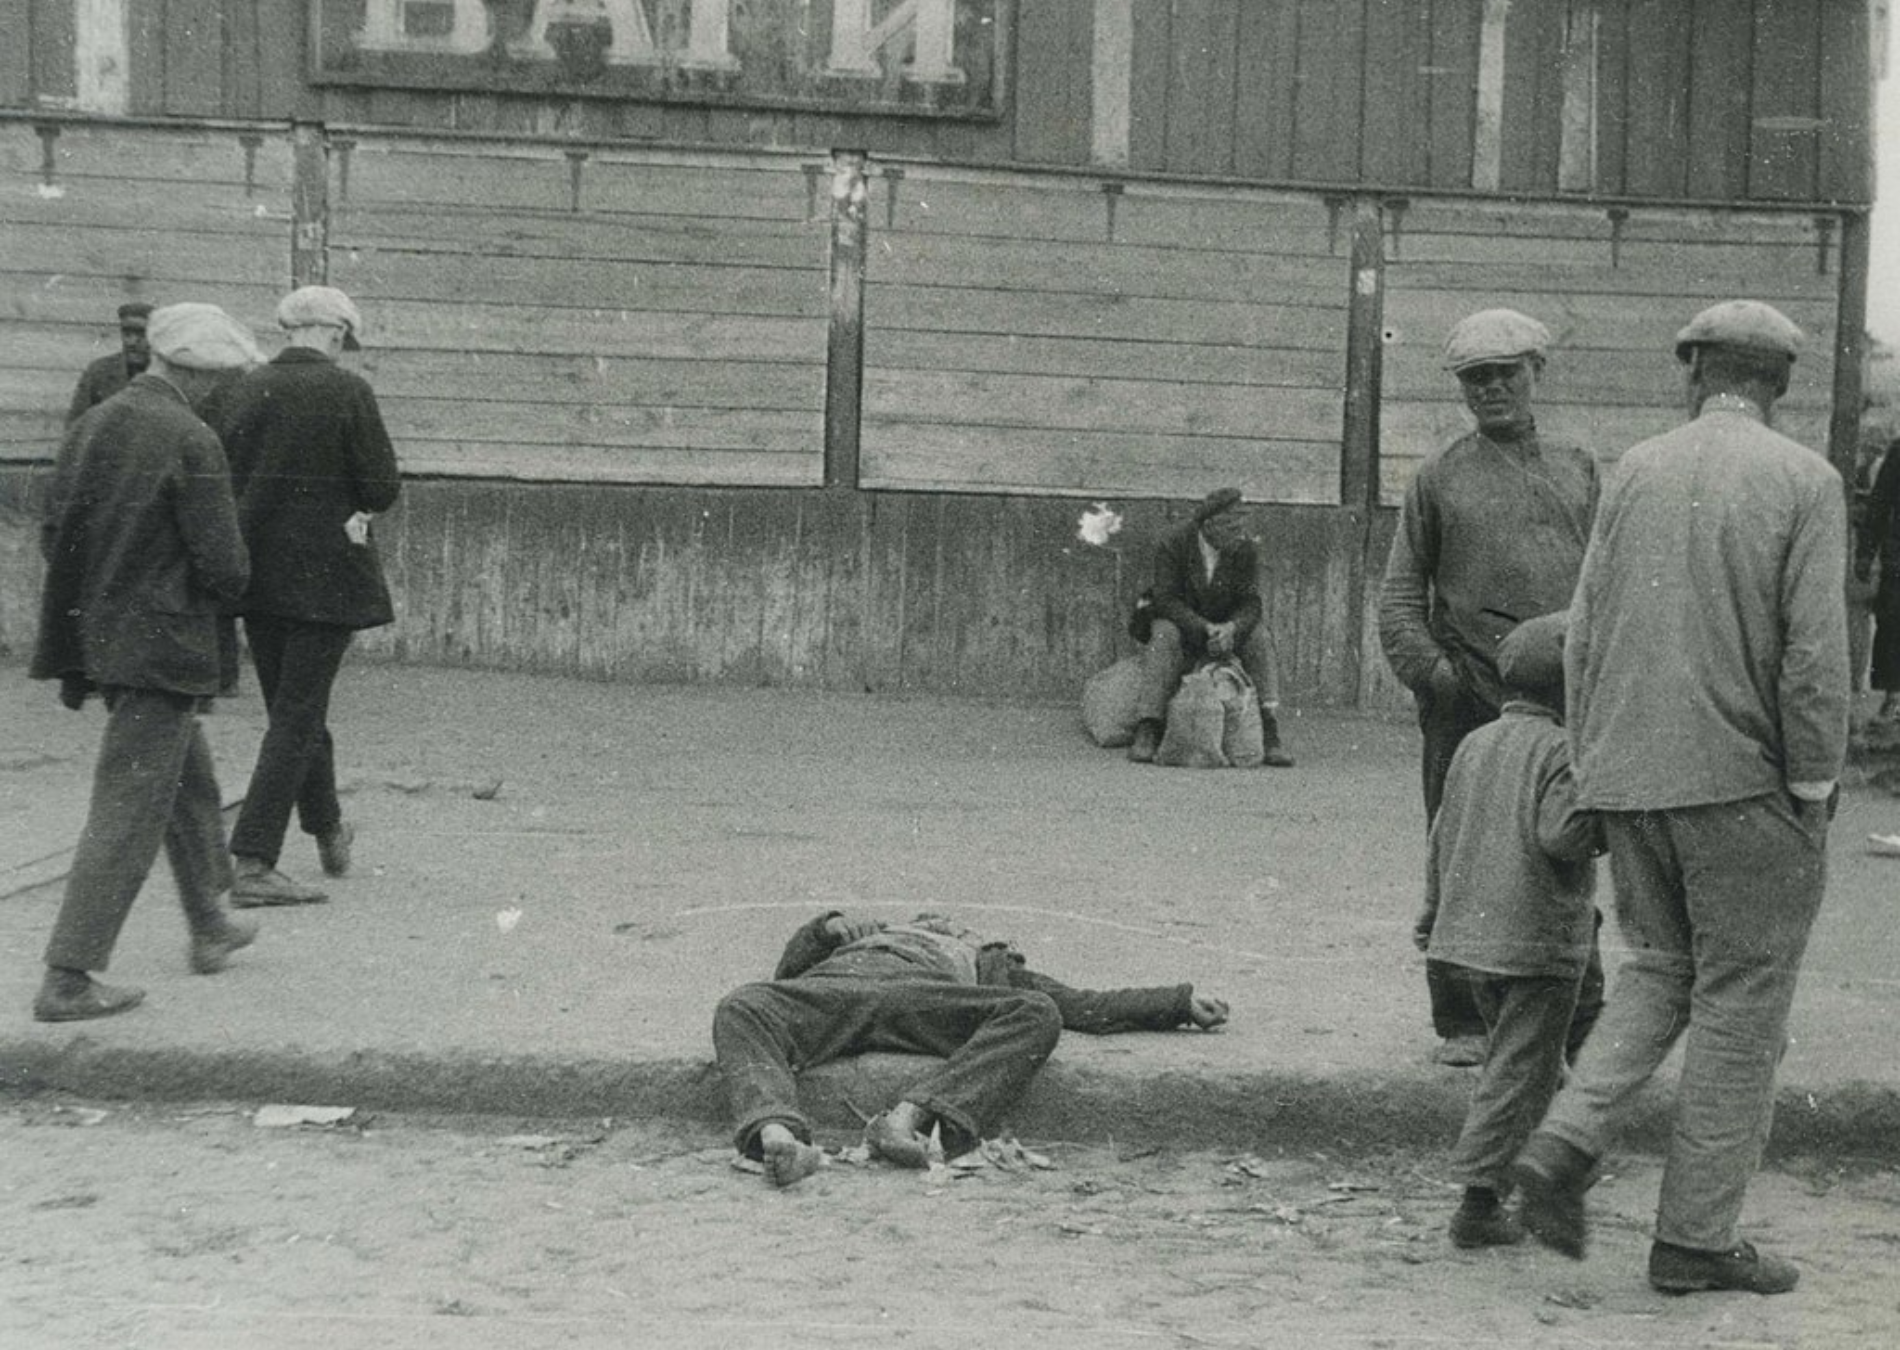 Victim of the Holodomor lying on a sidewalk in Kharkiv, Ukraine, photo by Alexander Wienerberger, 1932 or 1933.